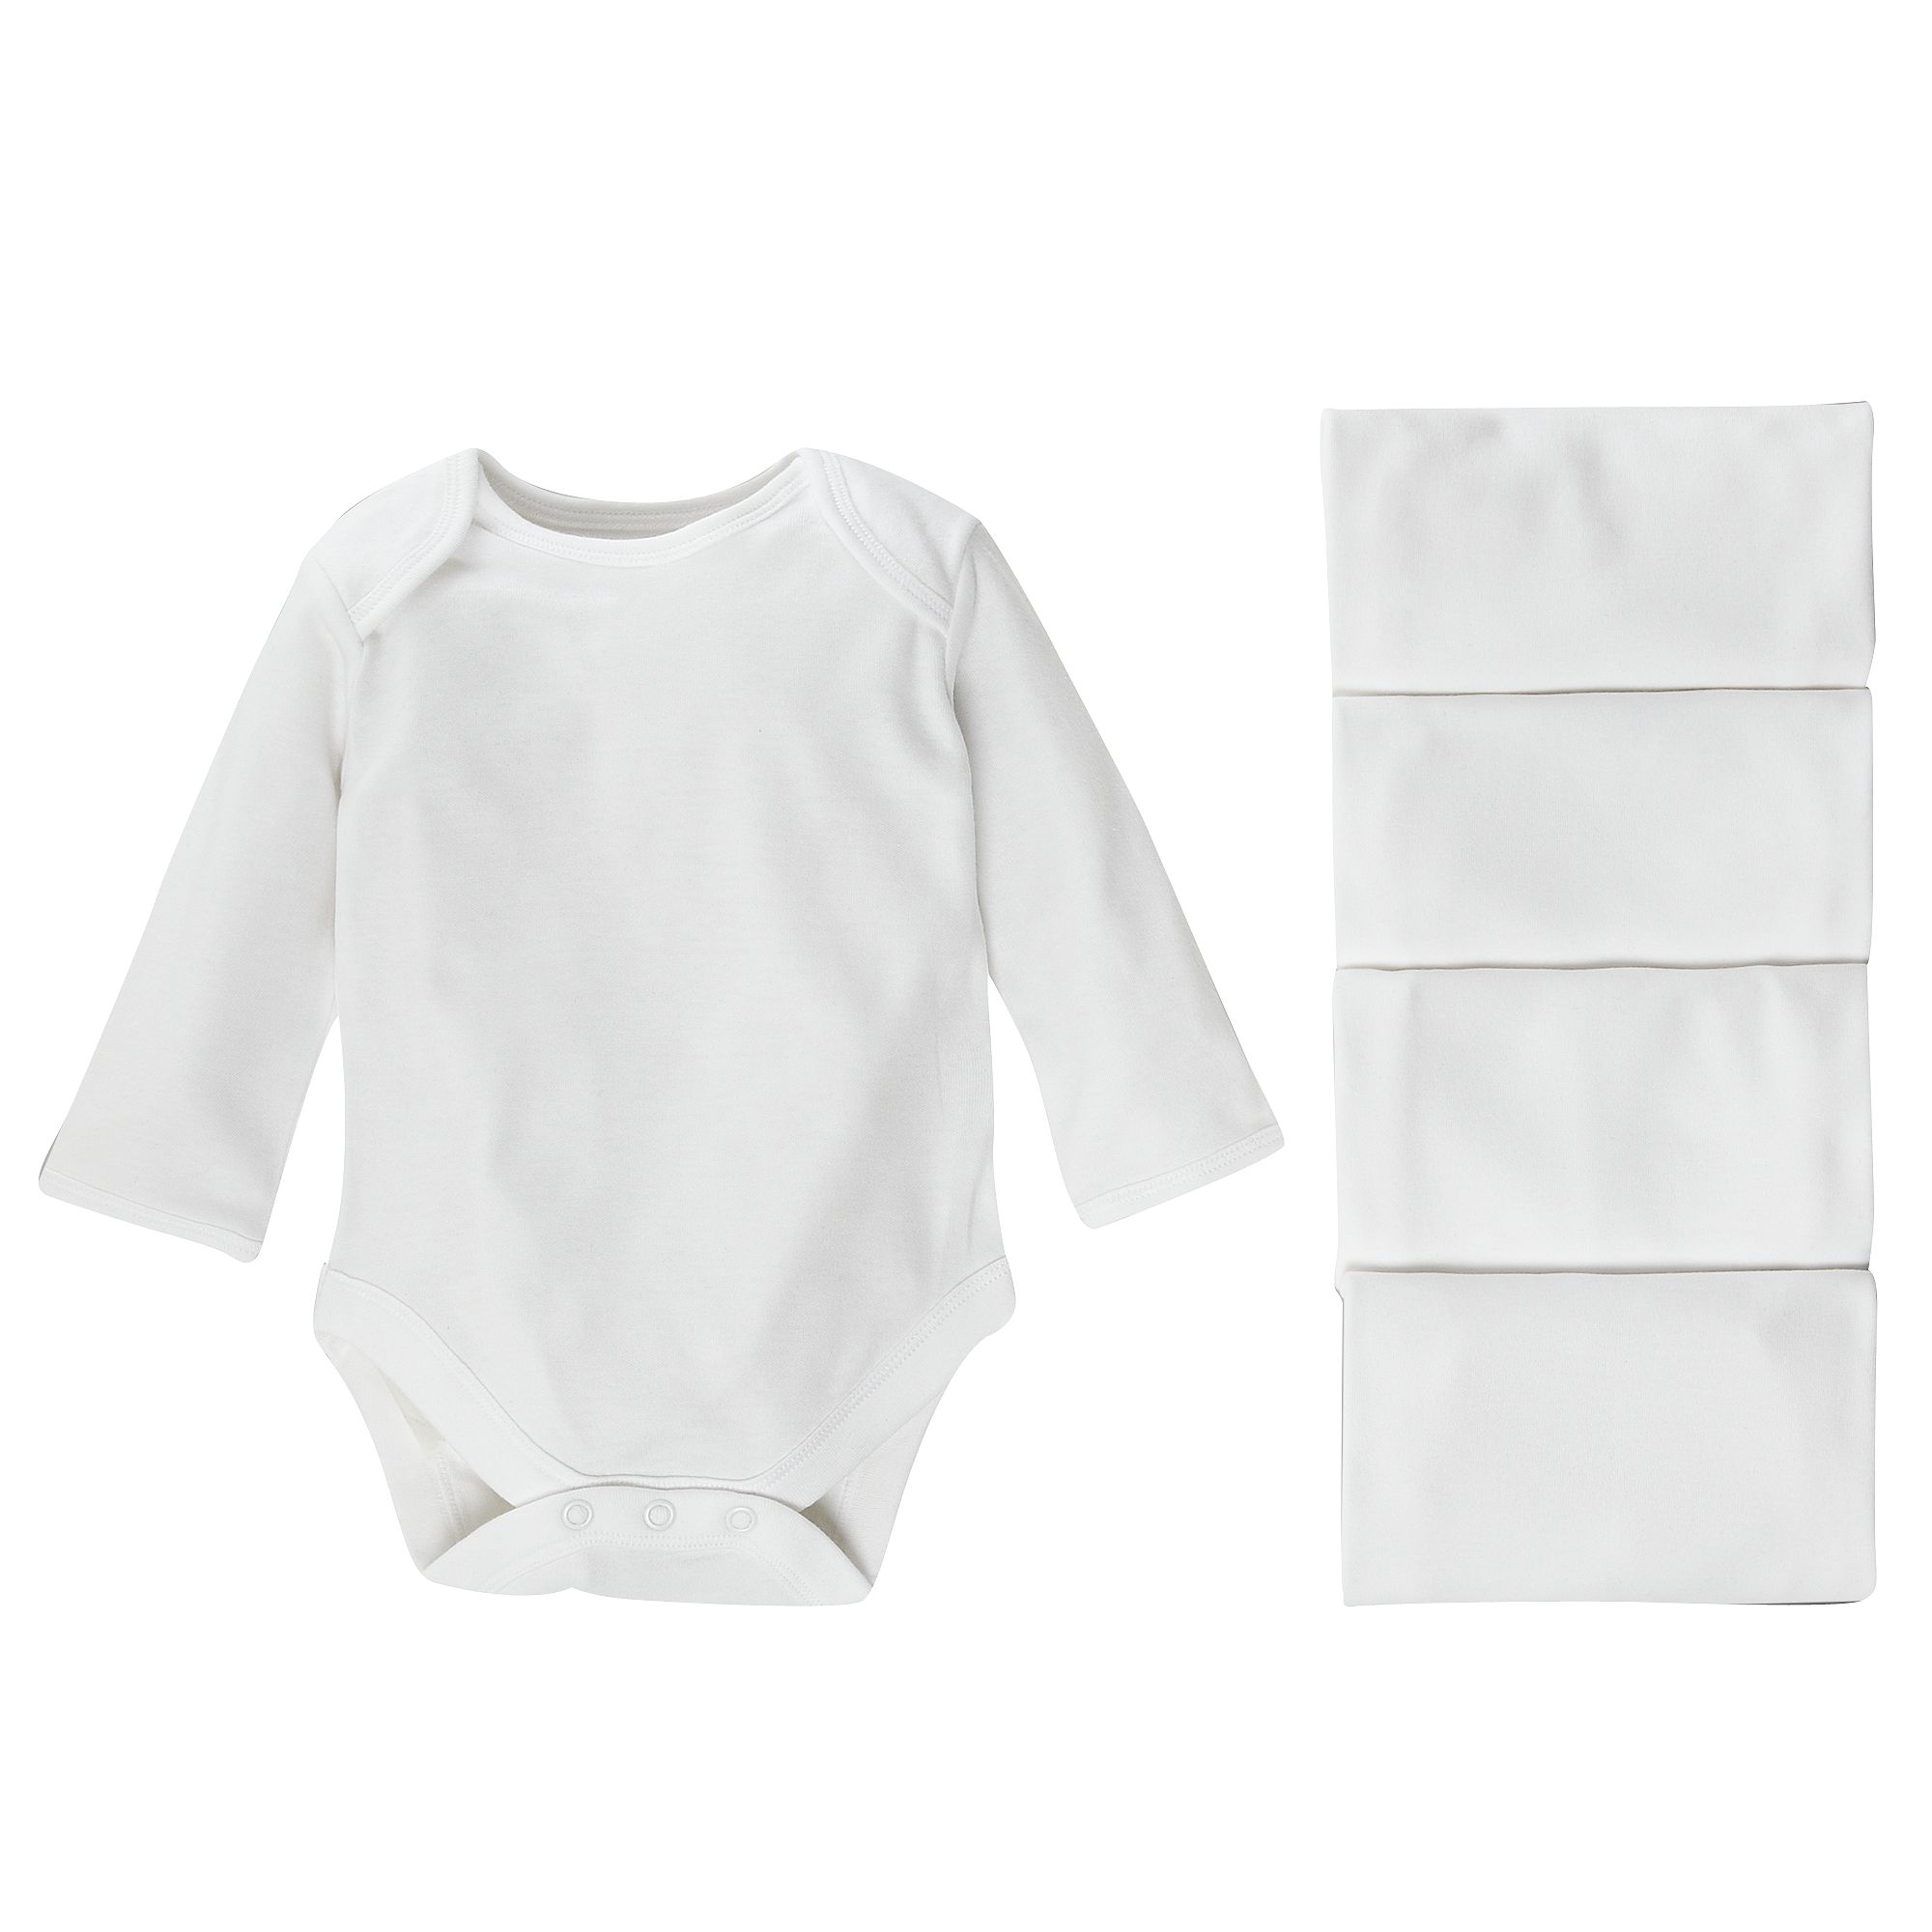 Buy John Lewis Baby Long Sleeve Bodysuits, Pack of 5, White online at 